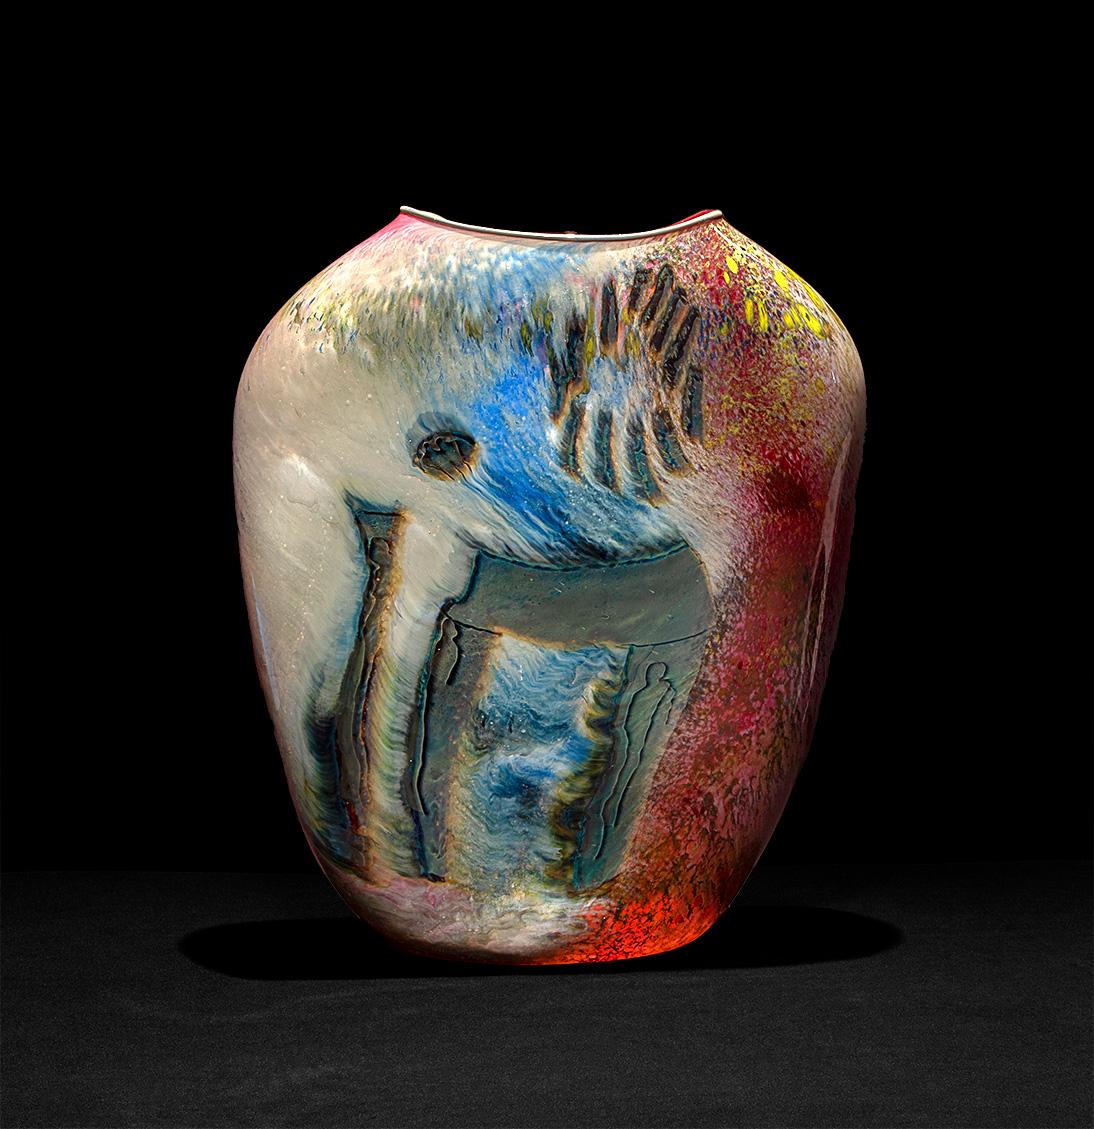 William Morris Figurative Sculpture - Stone Vessel.  Contemporary blown glass sculpture.  